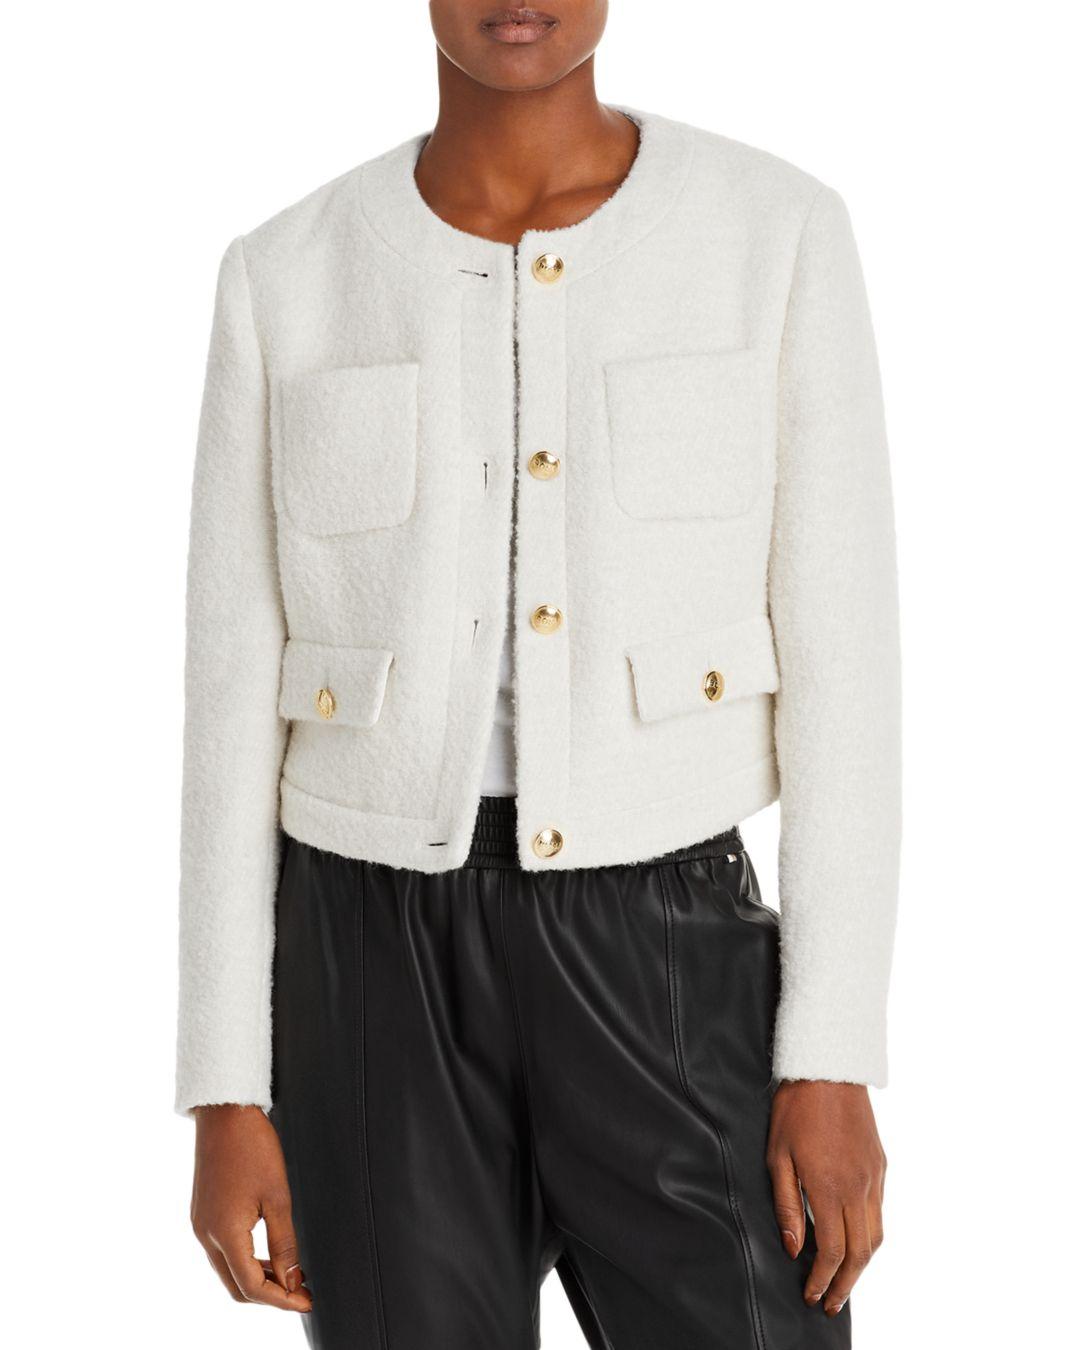 BOSS by HUGO BOSS Cotton Janoa Bouclé Jacket in Soft Cream (White) | Lyst